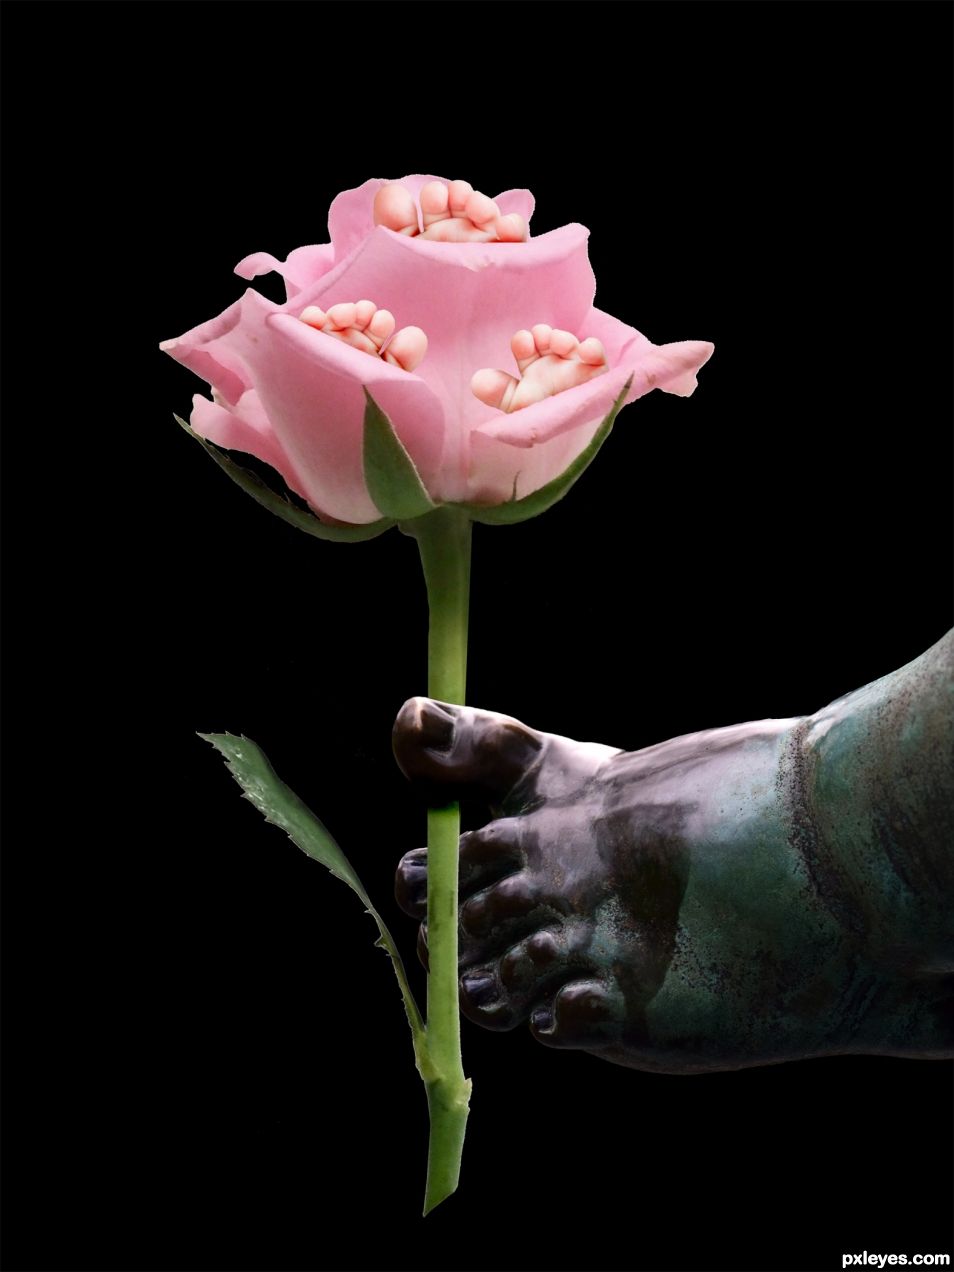 Toes in Rose